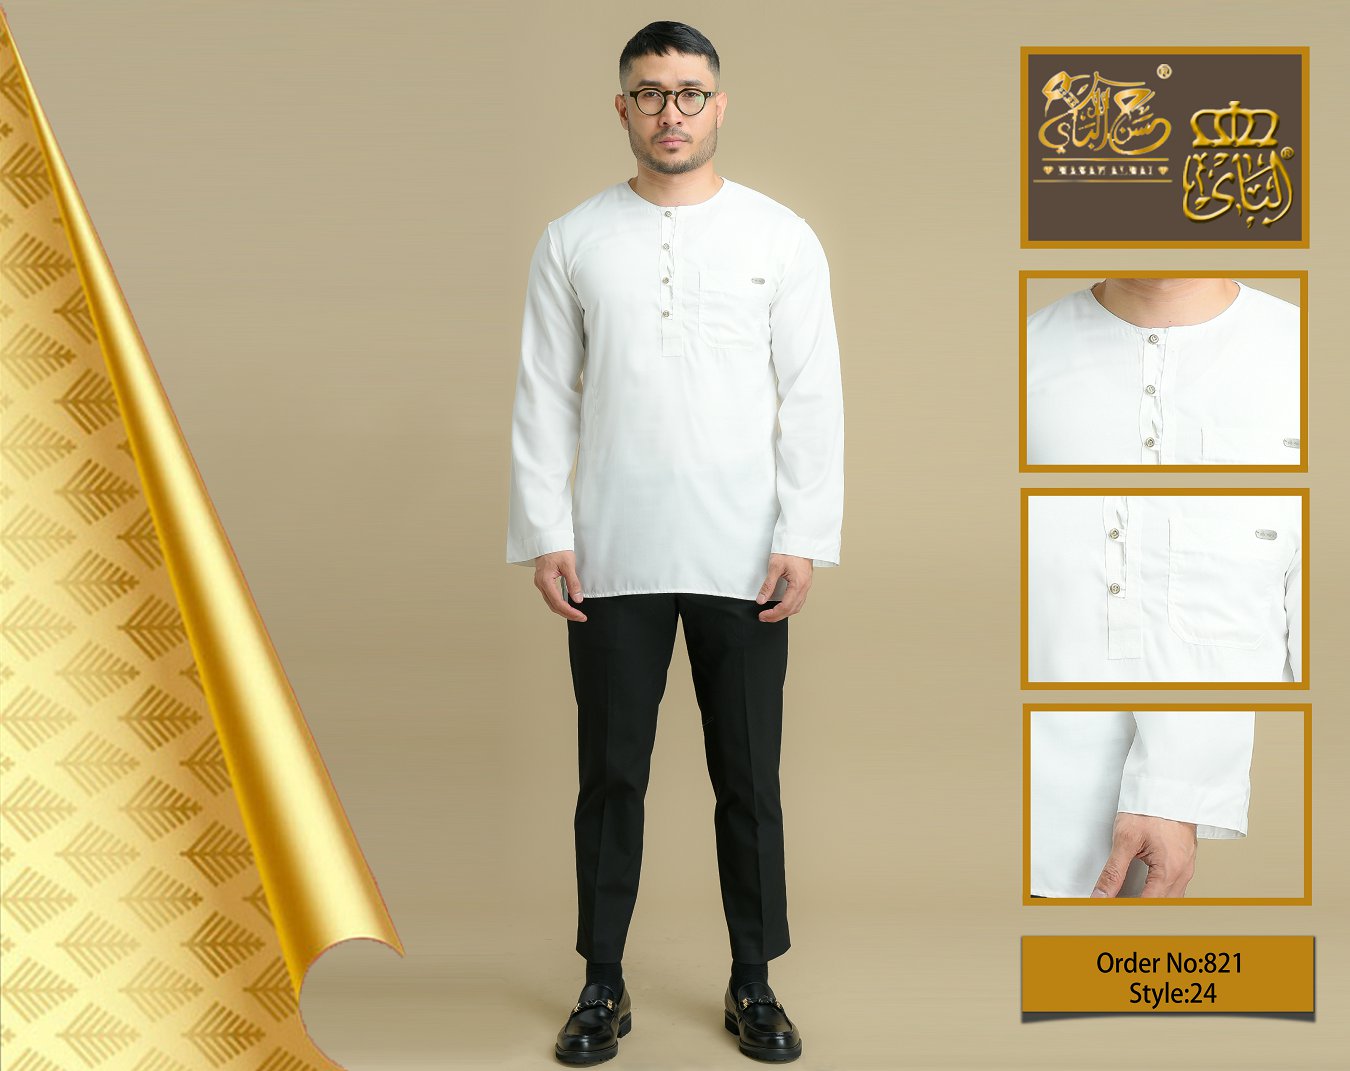 Malay clothing68